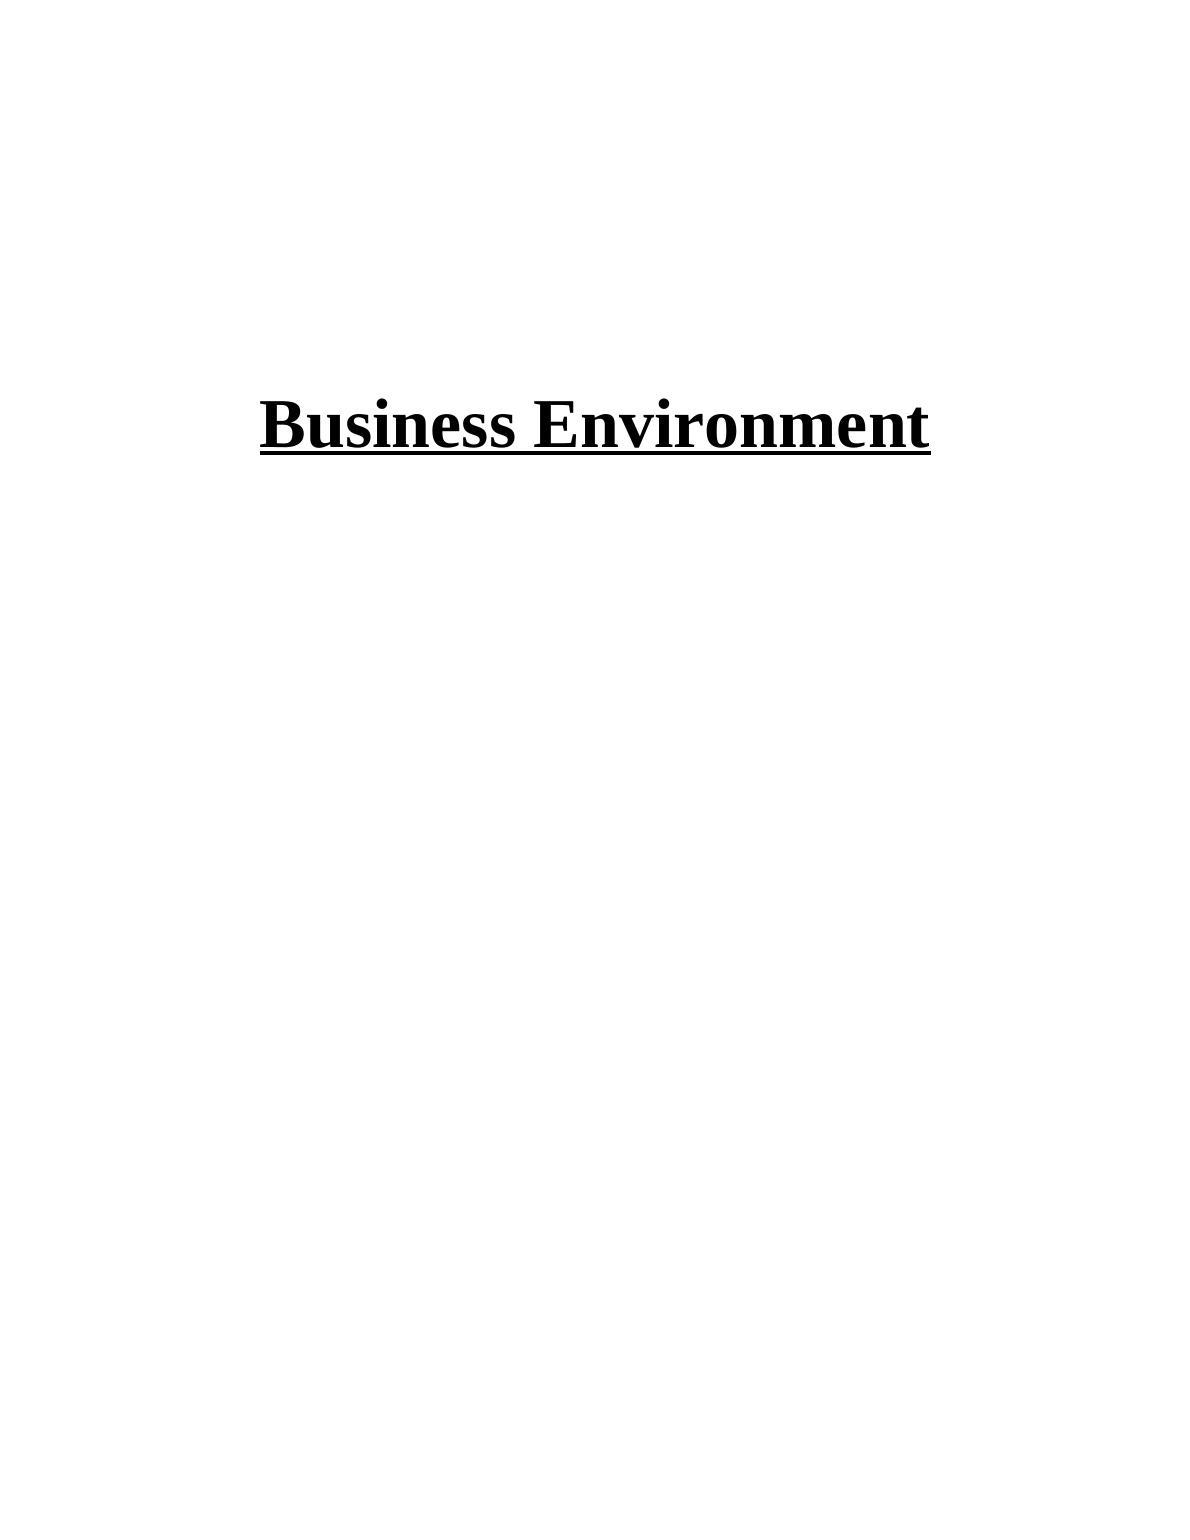 Business Environment Purposes_1